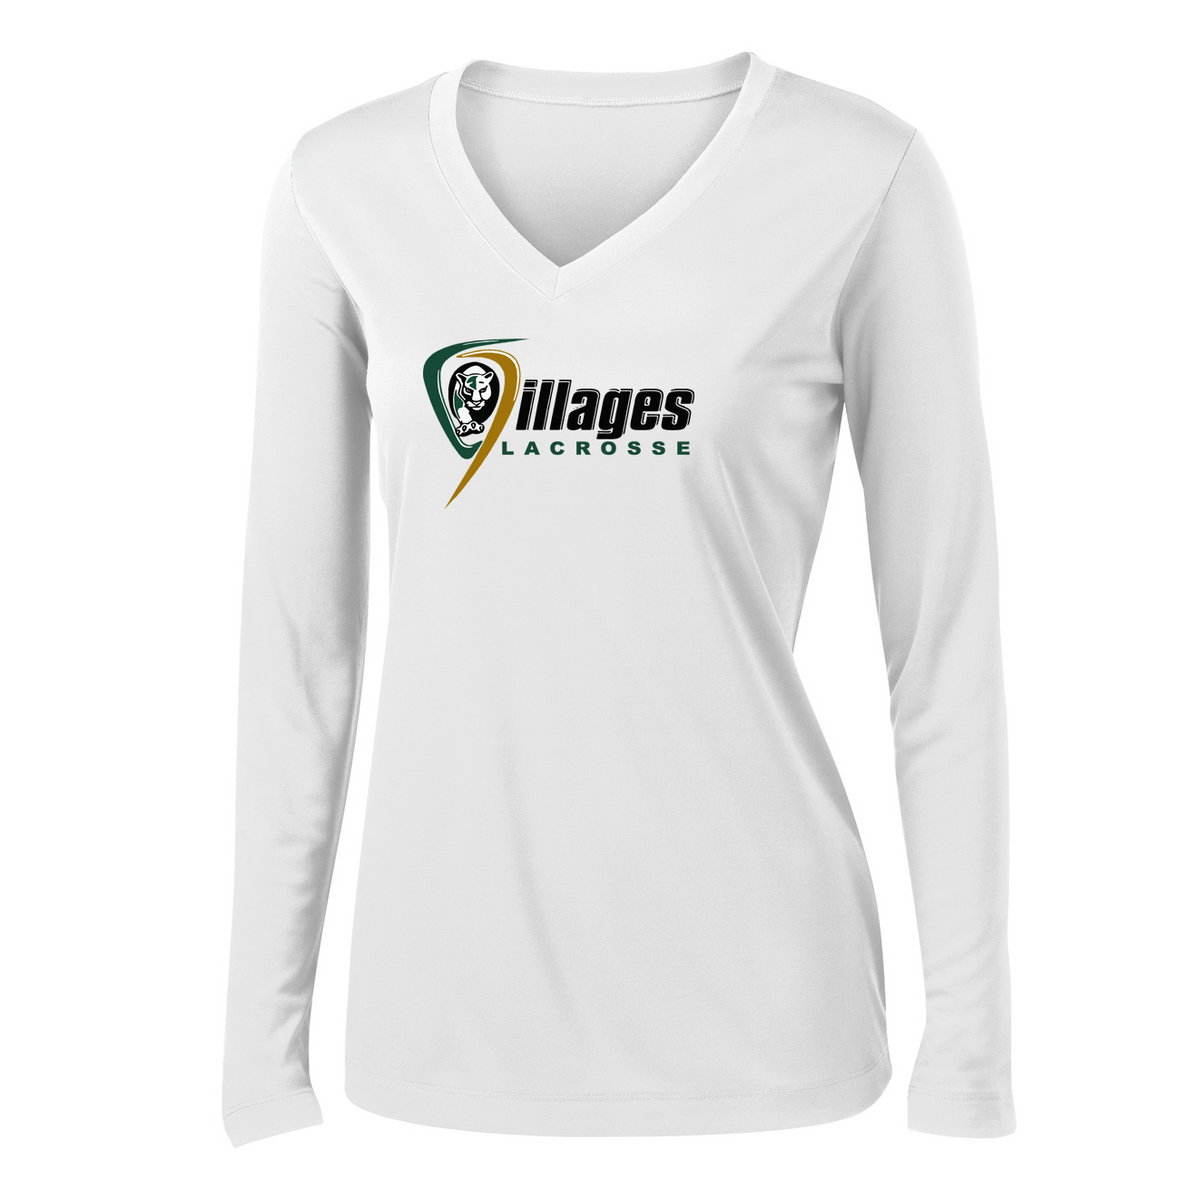 Villages Lacrosse Women's Long Sleeve Performance Shirt